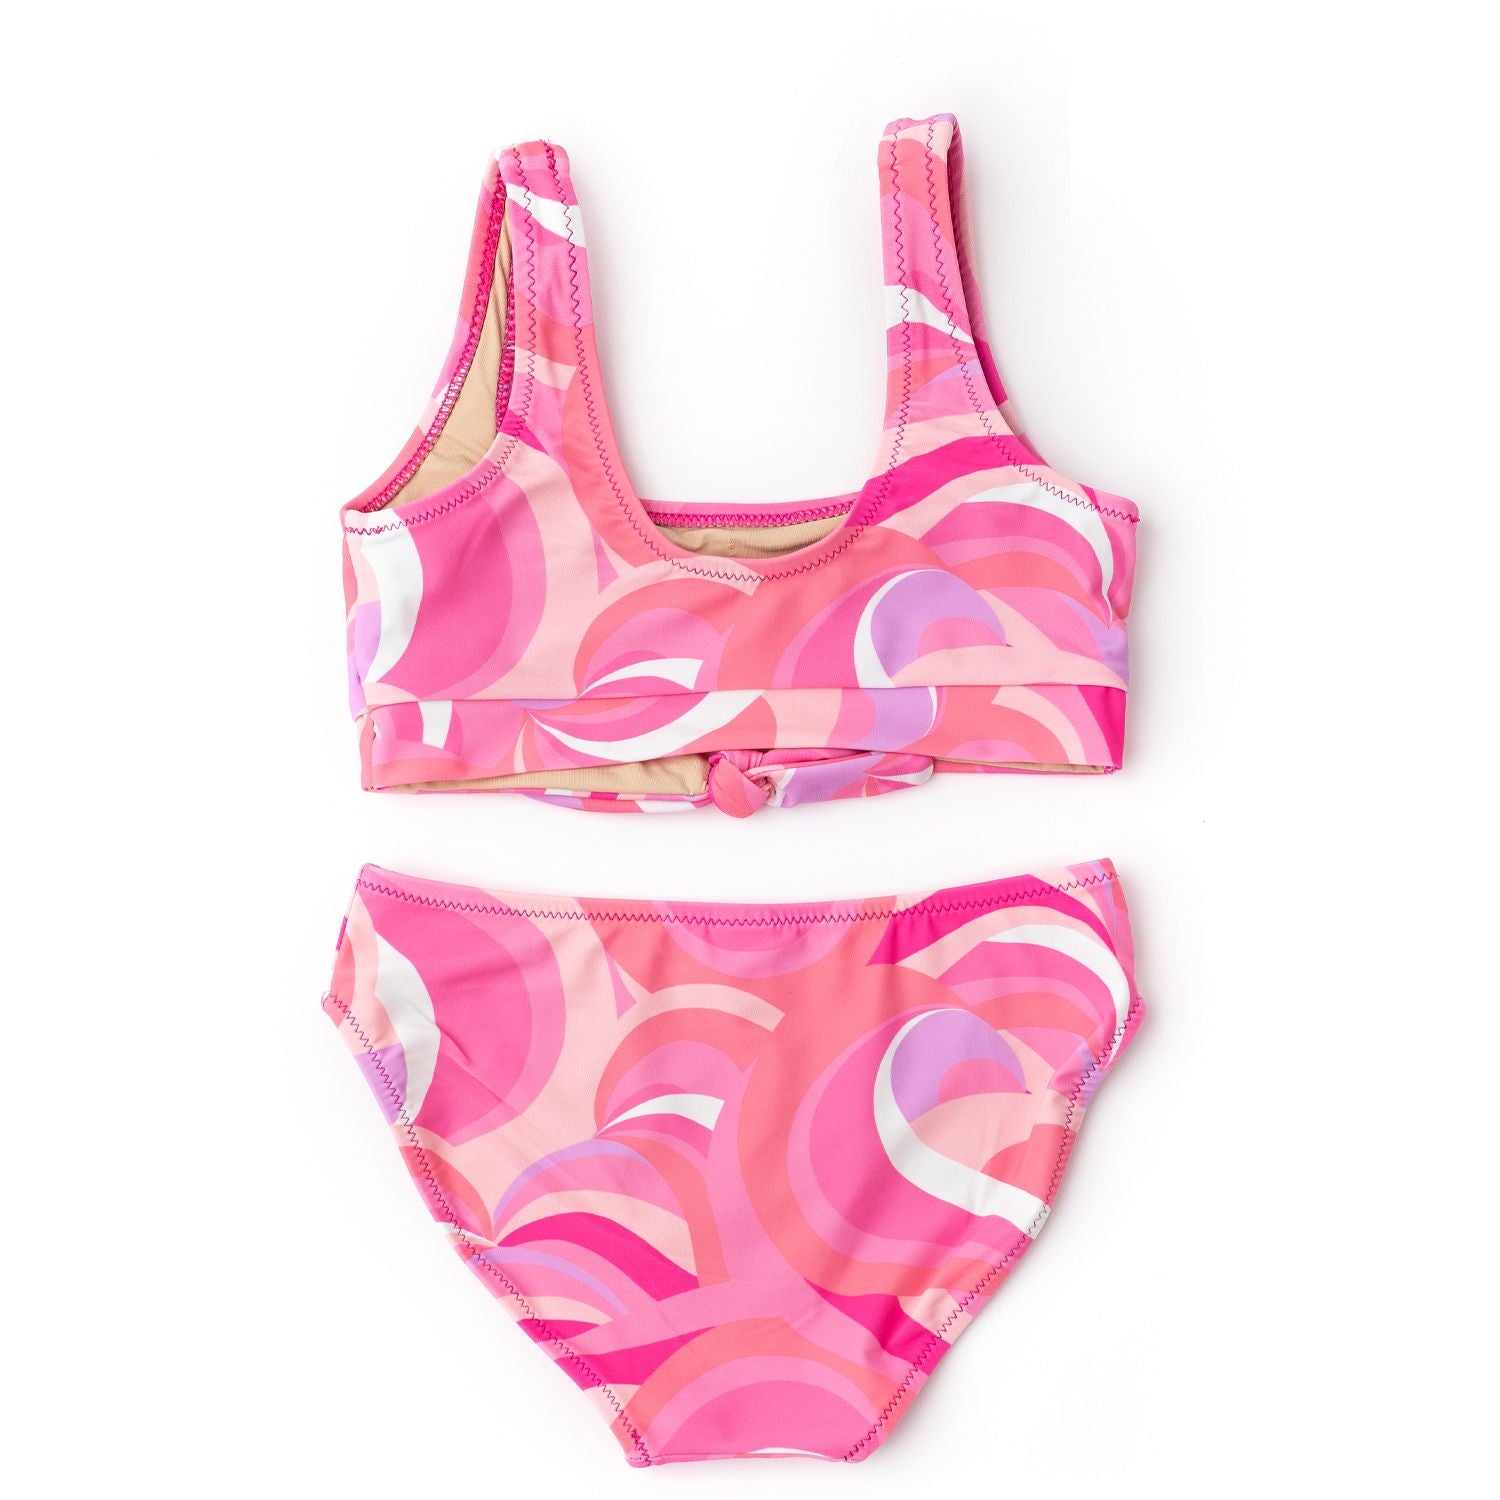 Knot Bikini Two Piece Swimsuit-Pink Waves